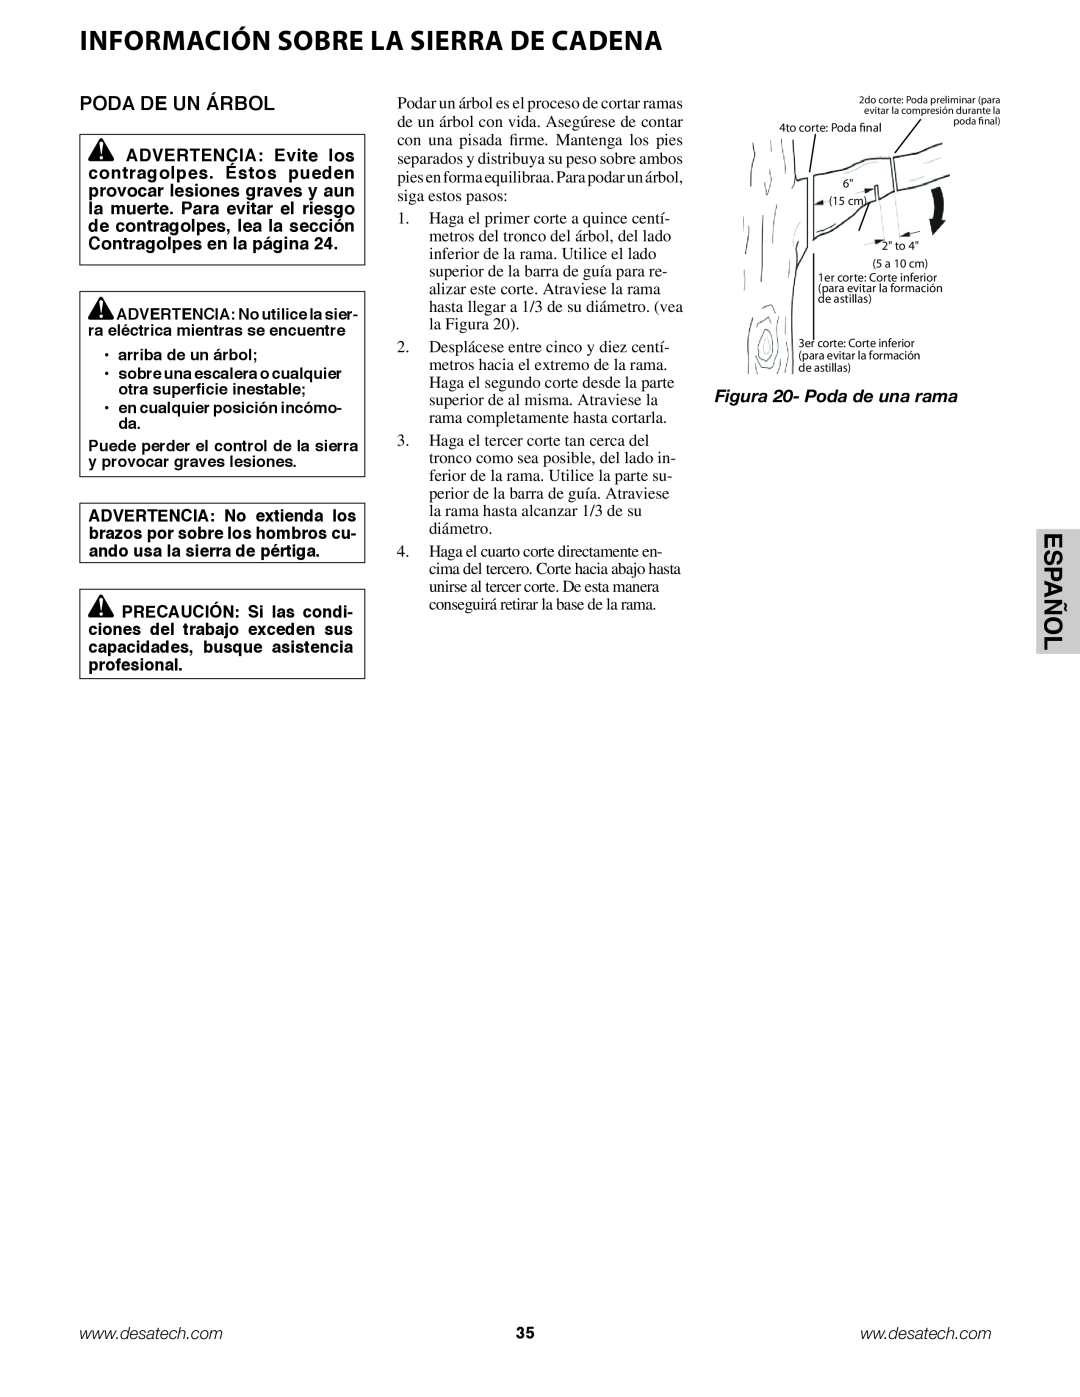 Remington Power Tools BS188A, BPS188A, BS188A owner manual Información sobre la sierra de cadena, Español, Poda De Un Árbol 